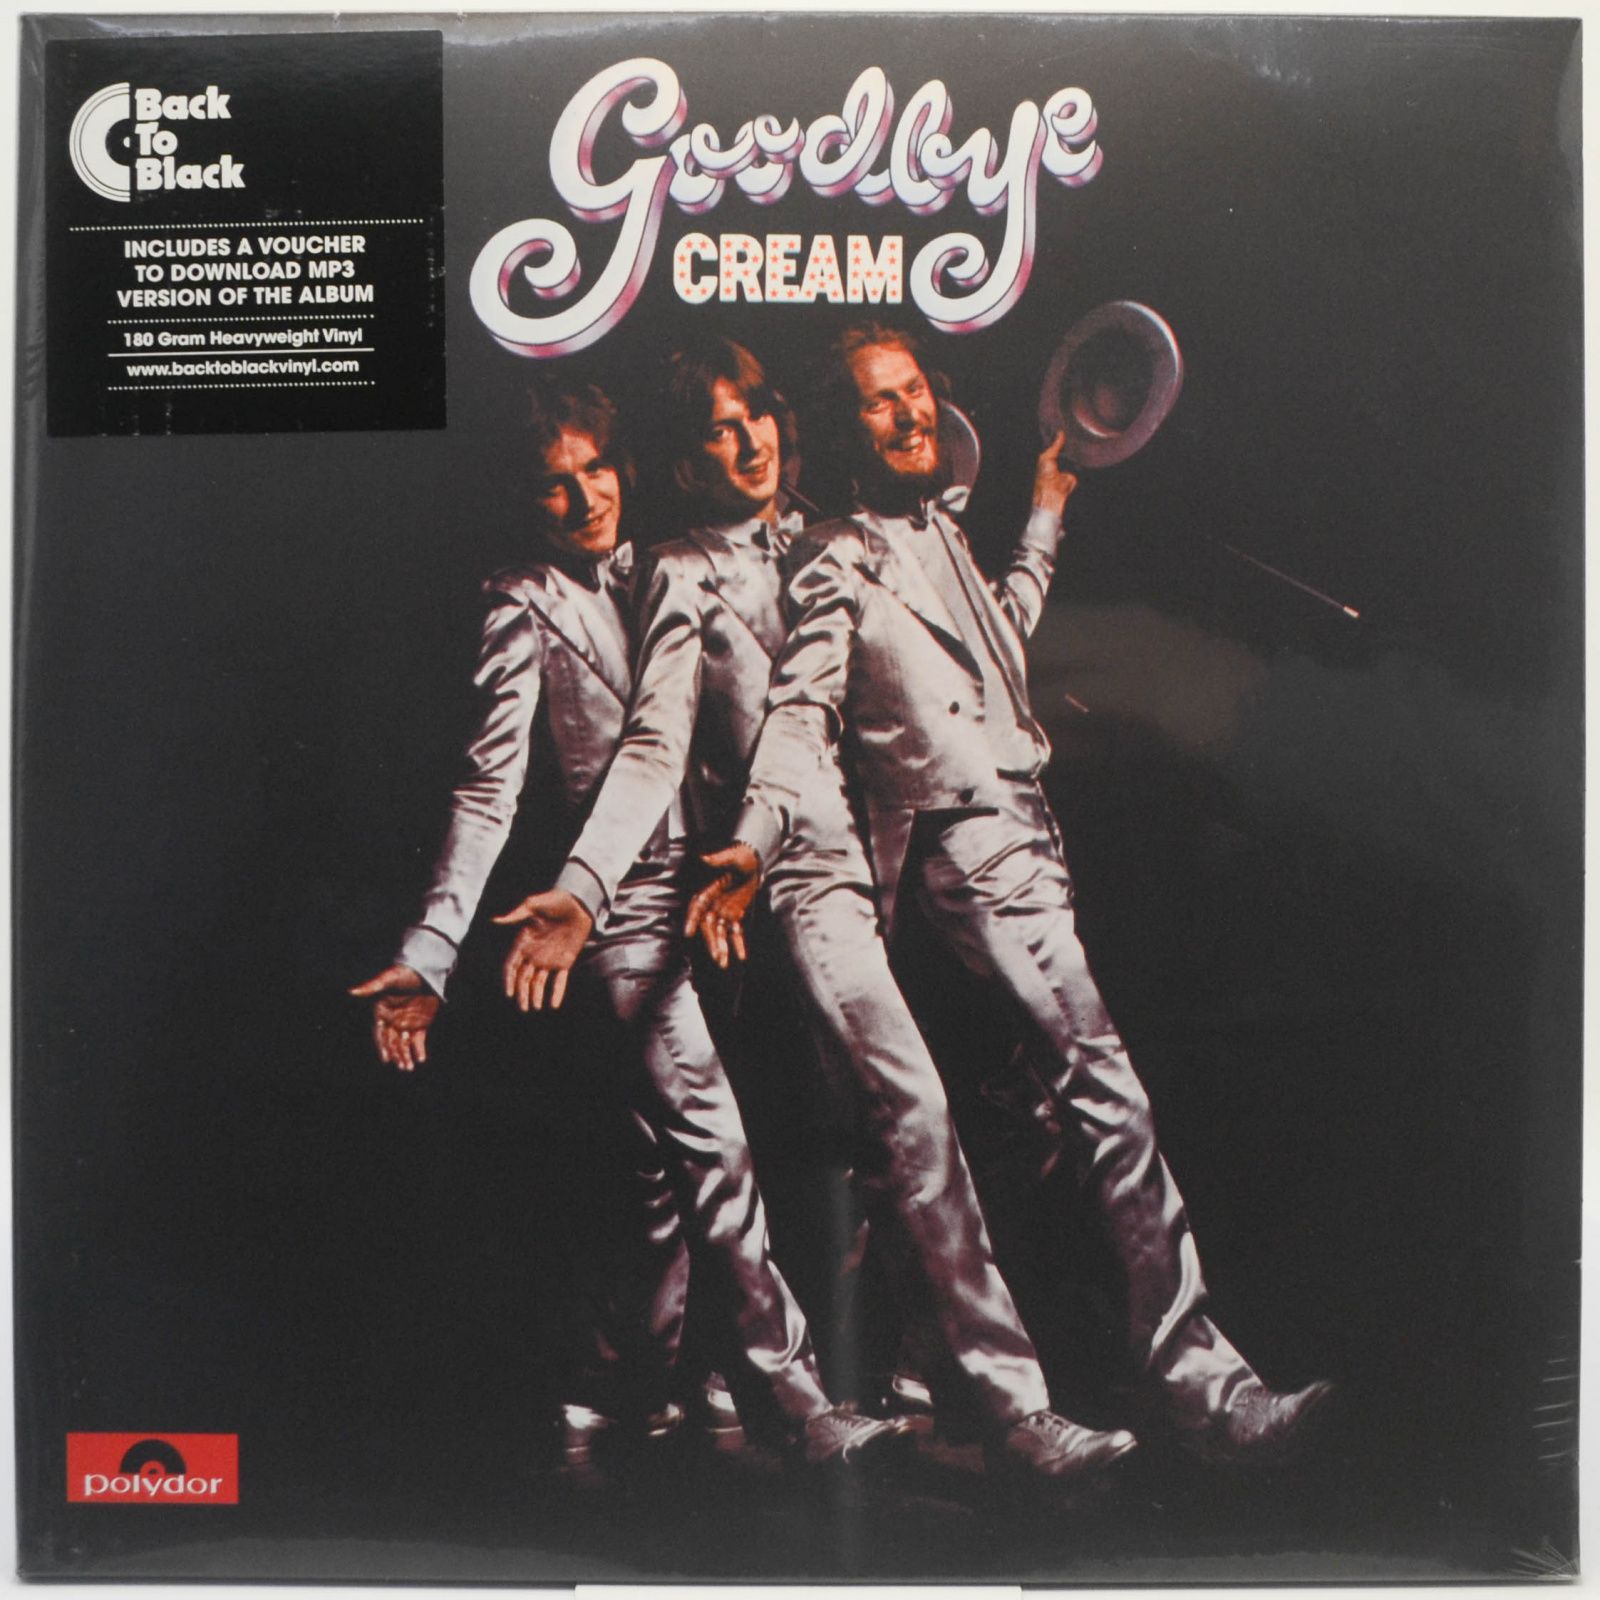 Cream — Goodbye, 2015